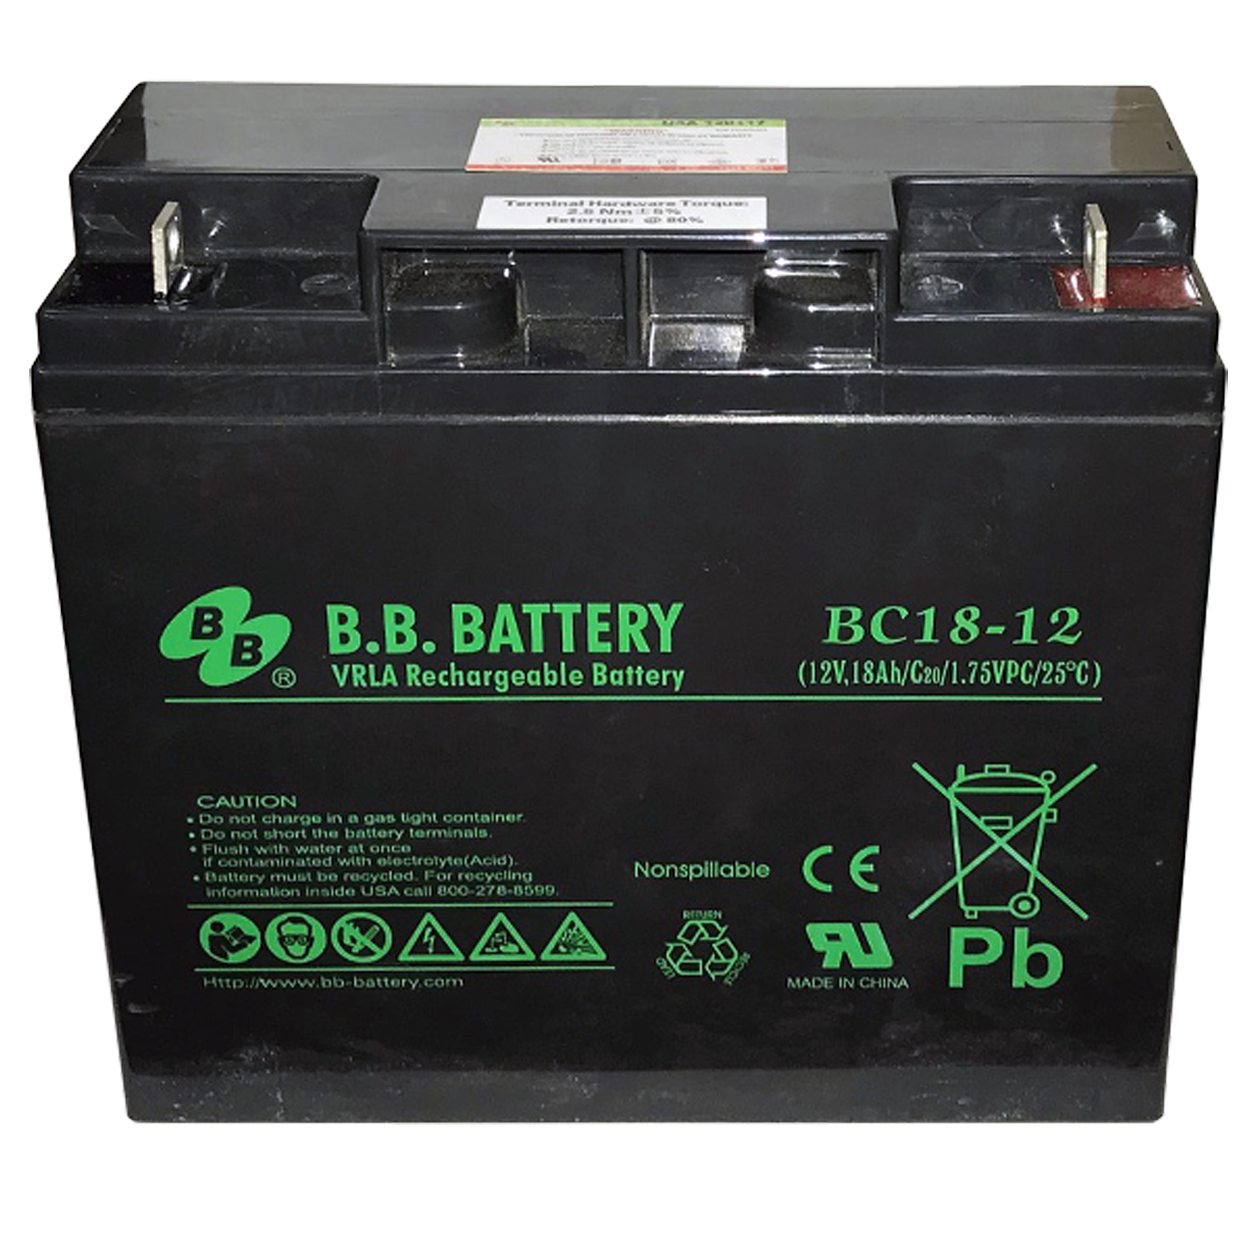 Bc battery. Аккумулятор Yuasa 12v 18ah. B.B.Battery evp20-12fr. B.B. Battery HR 9-12. Аккумуляторы в упс 24 двойные.